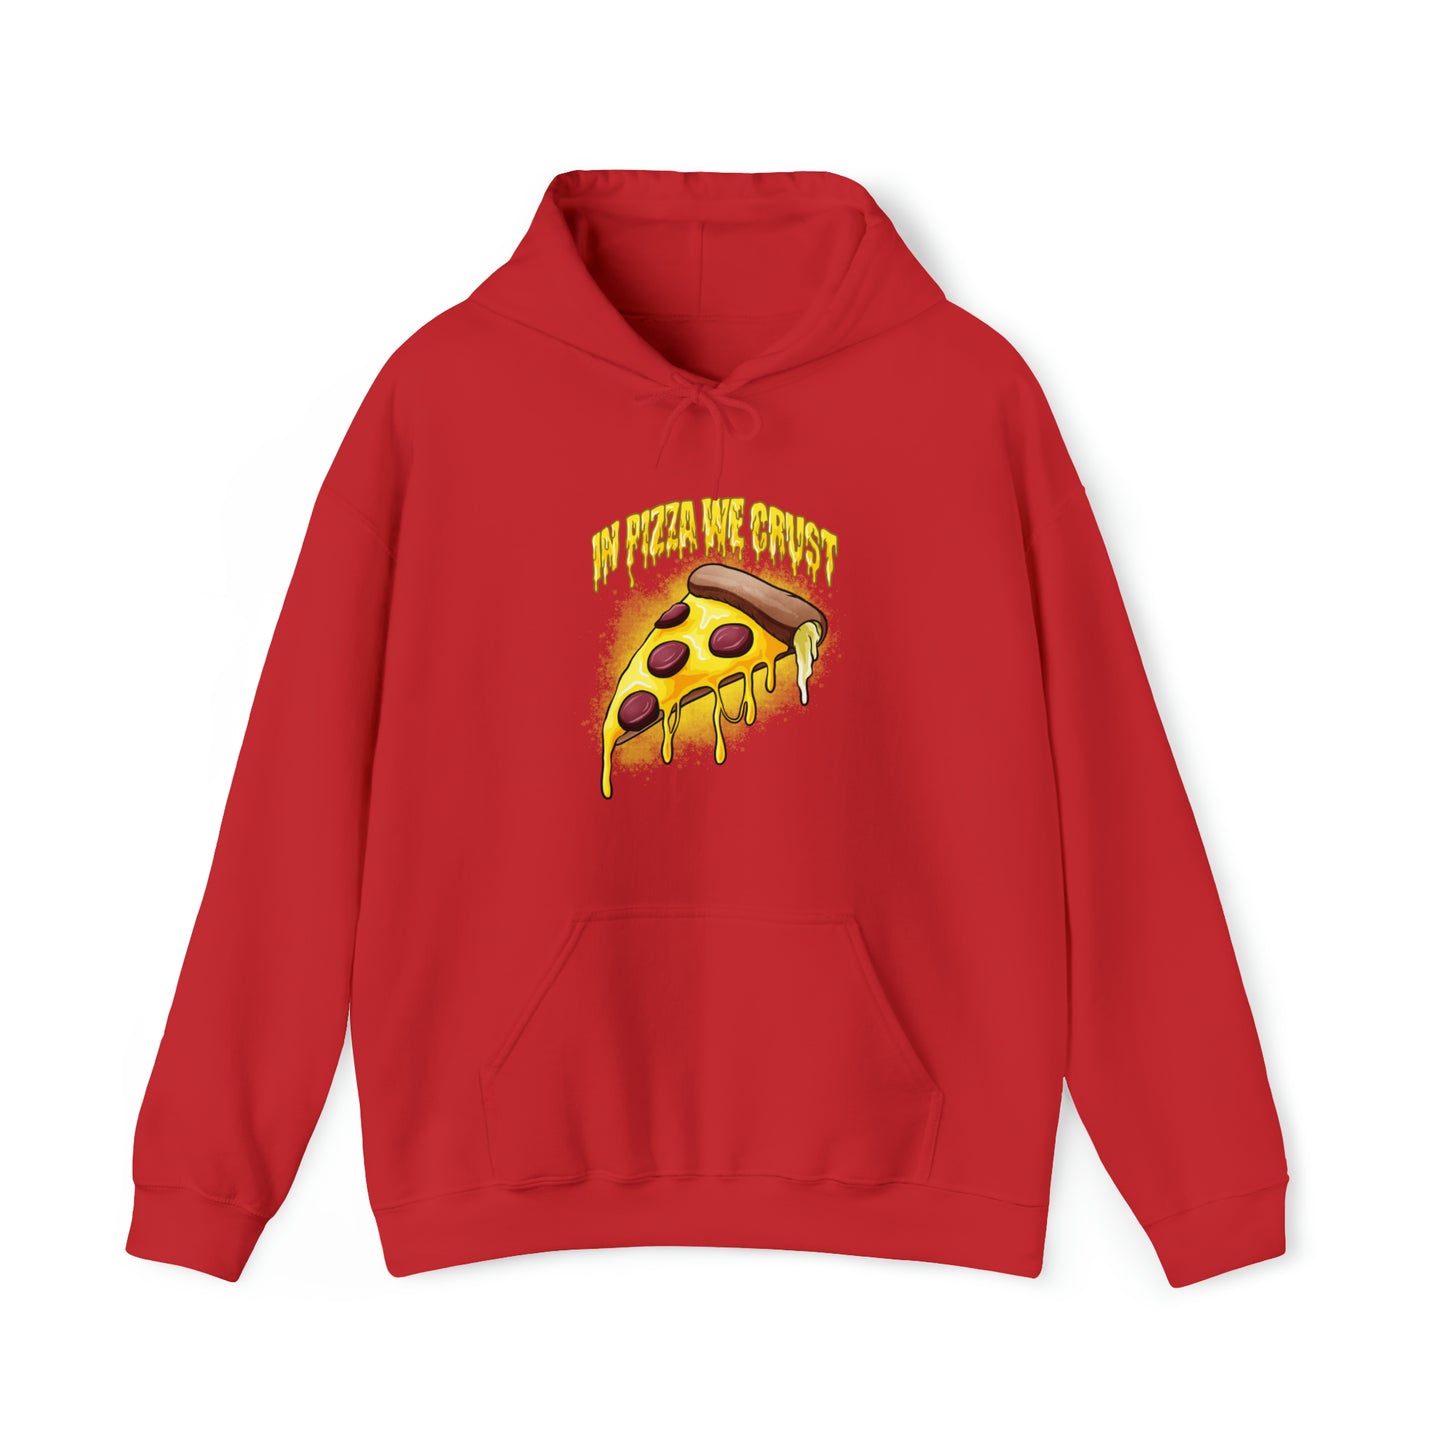 Custom Parody Hooded Sweatshirt, In Pizza We Crust design